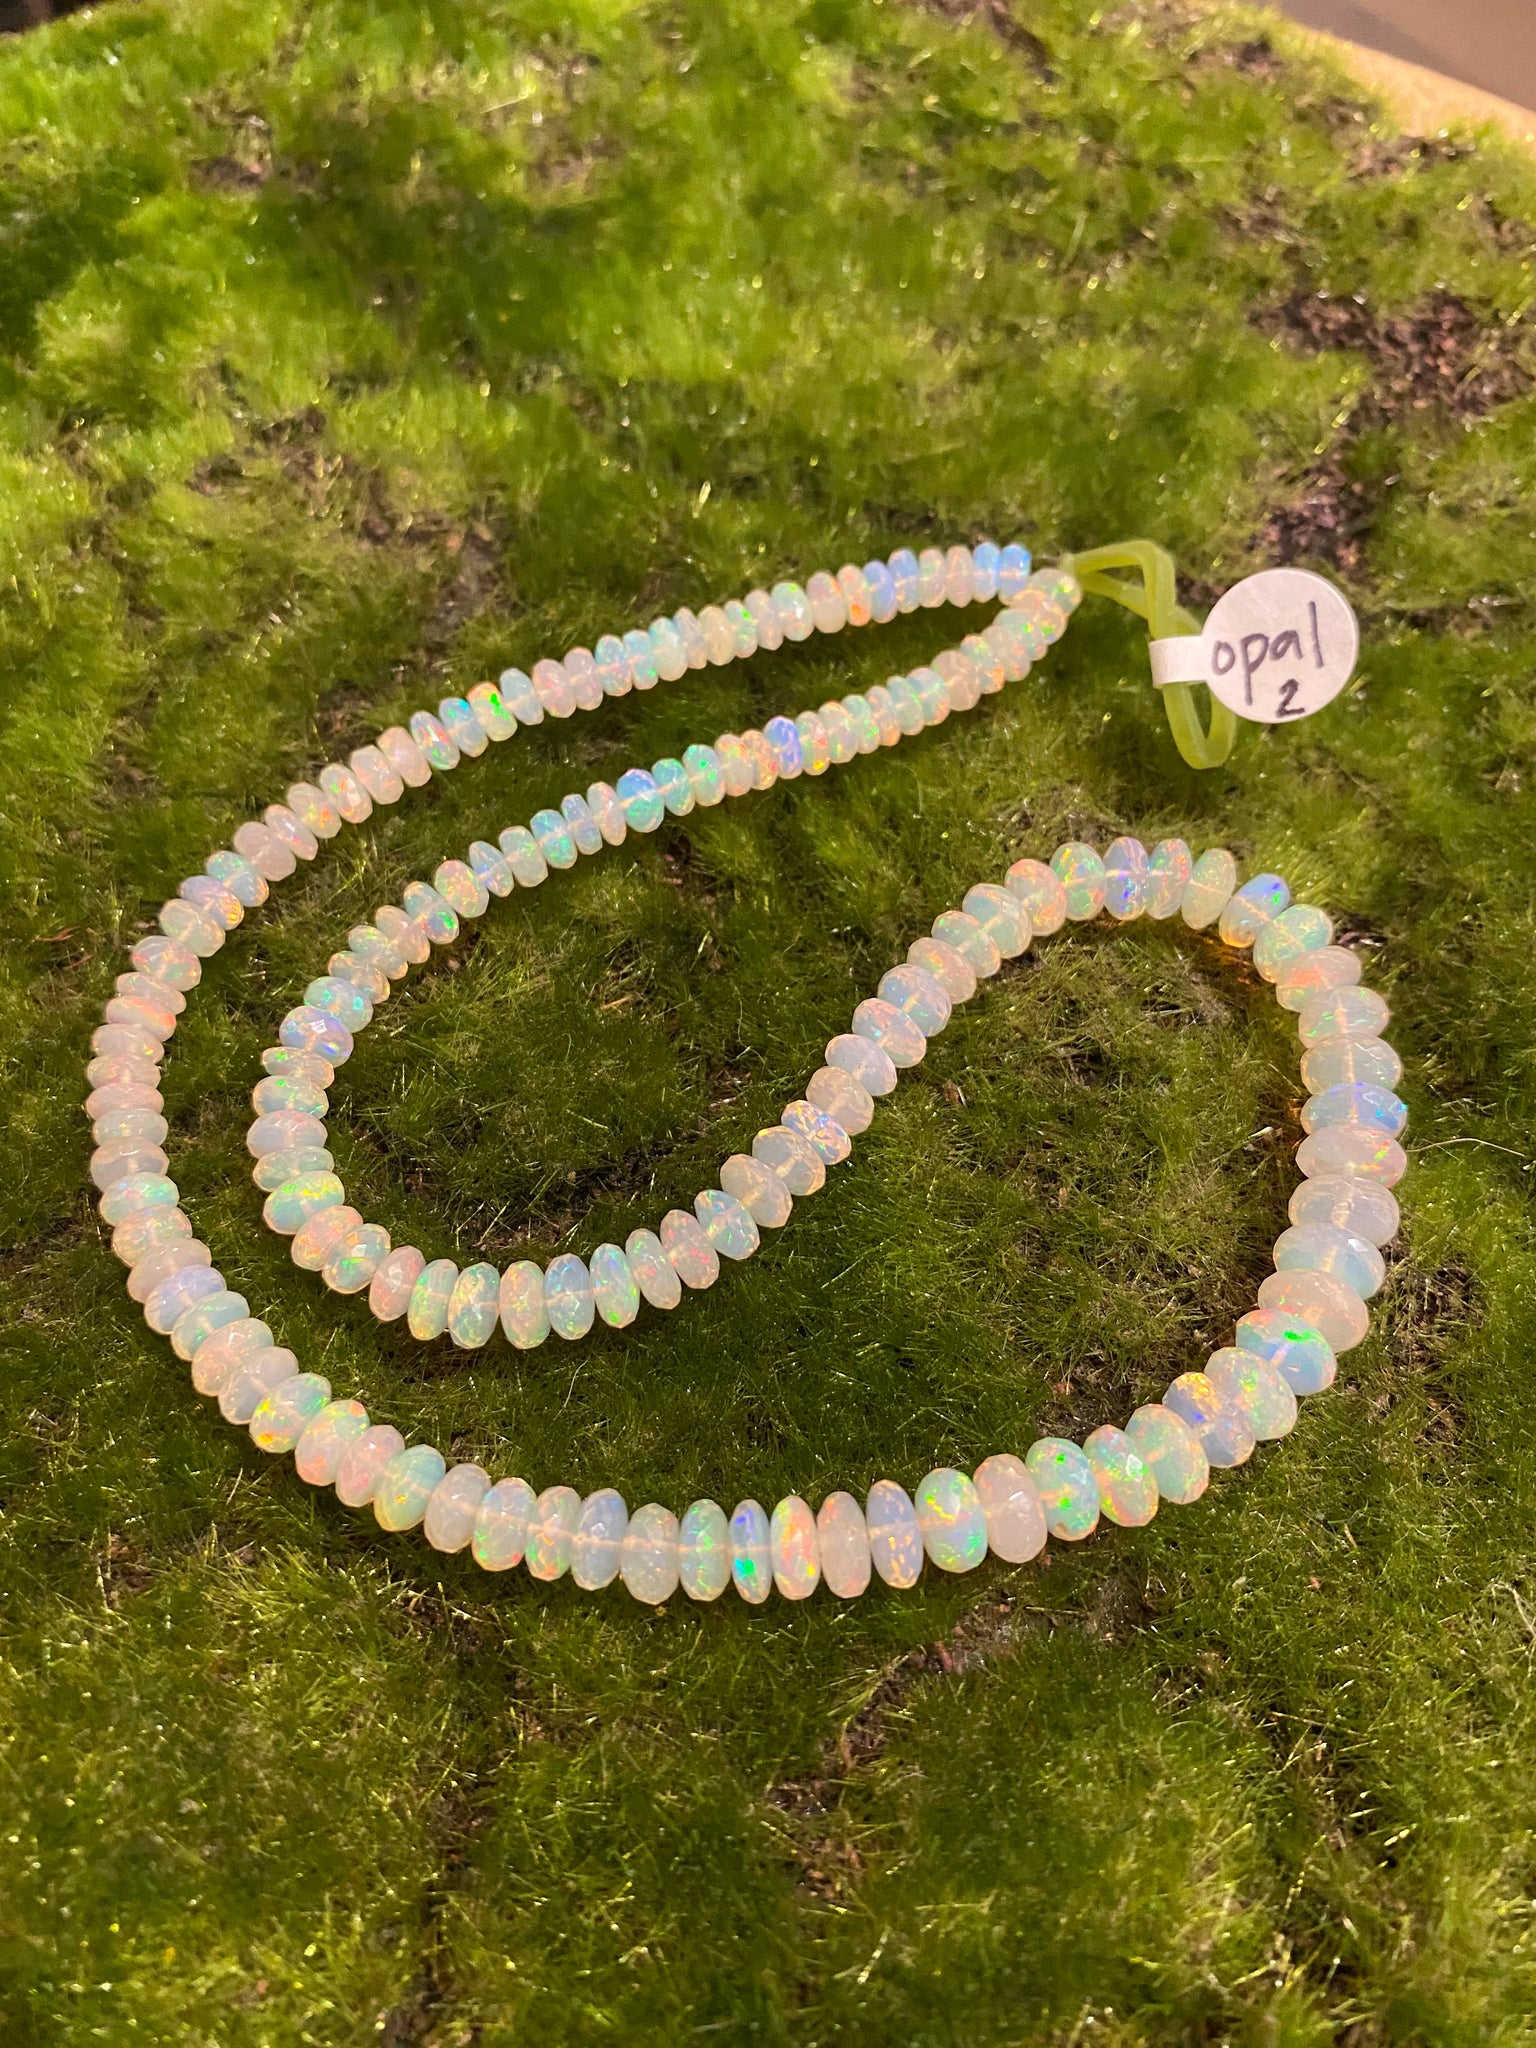 Genuine 42.00 Cts Ethiopian Opal Beads Strand